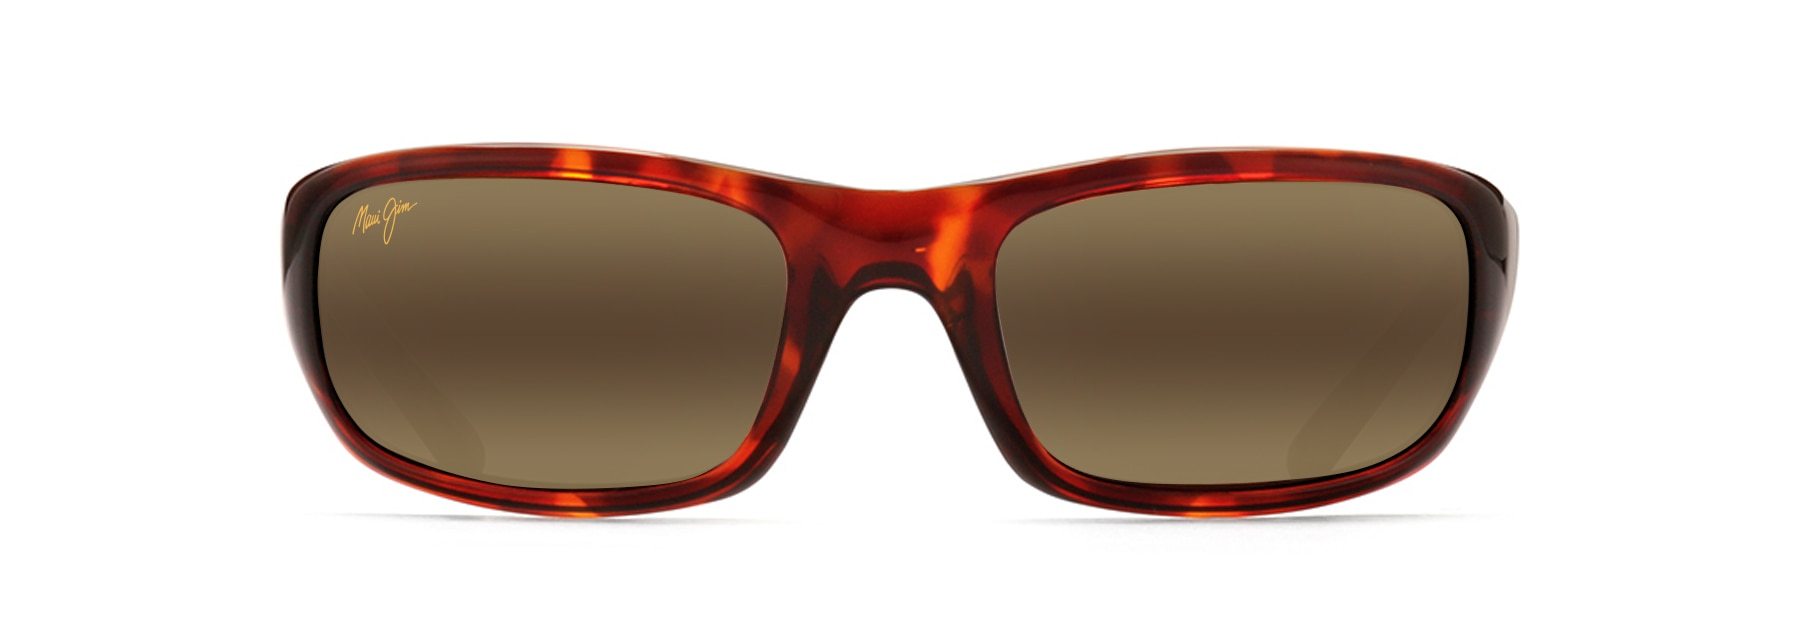 MyMaui Stingray MM103-006 Sunglasses